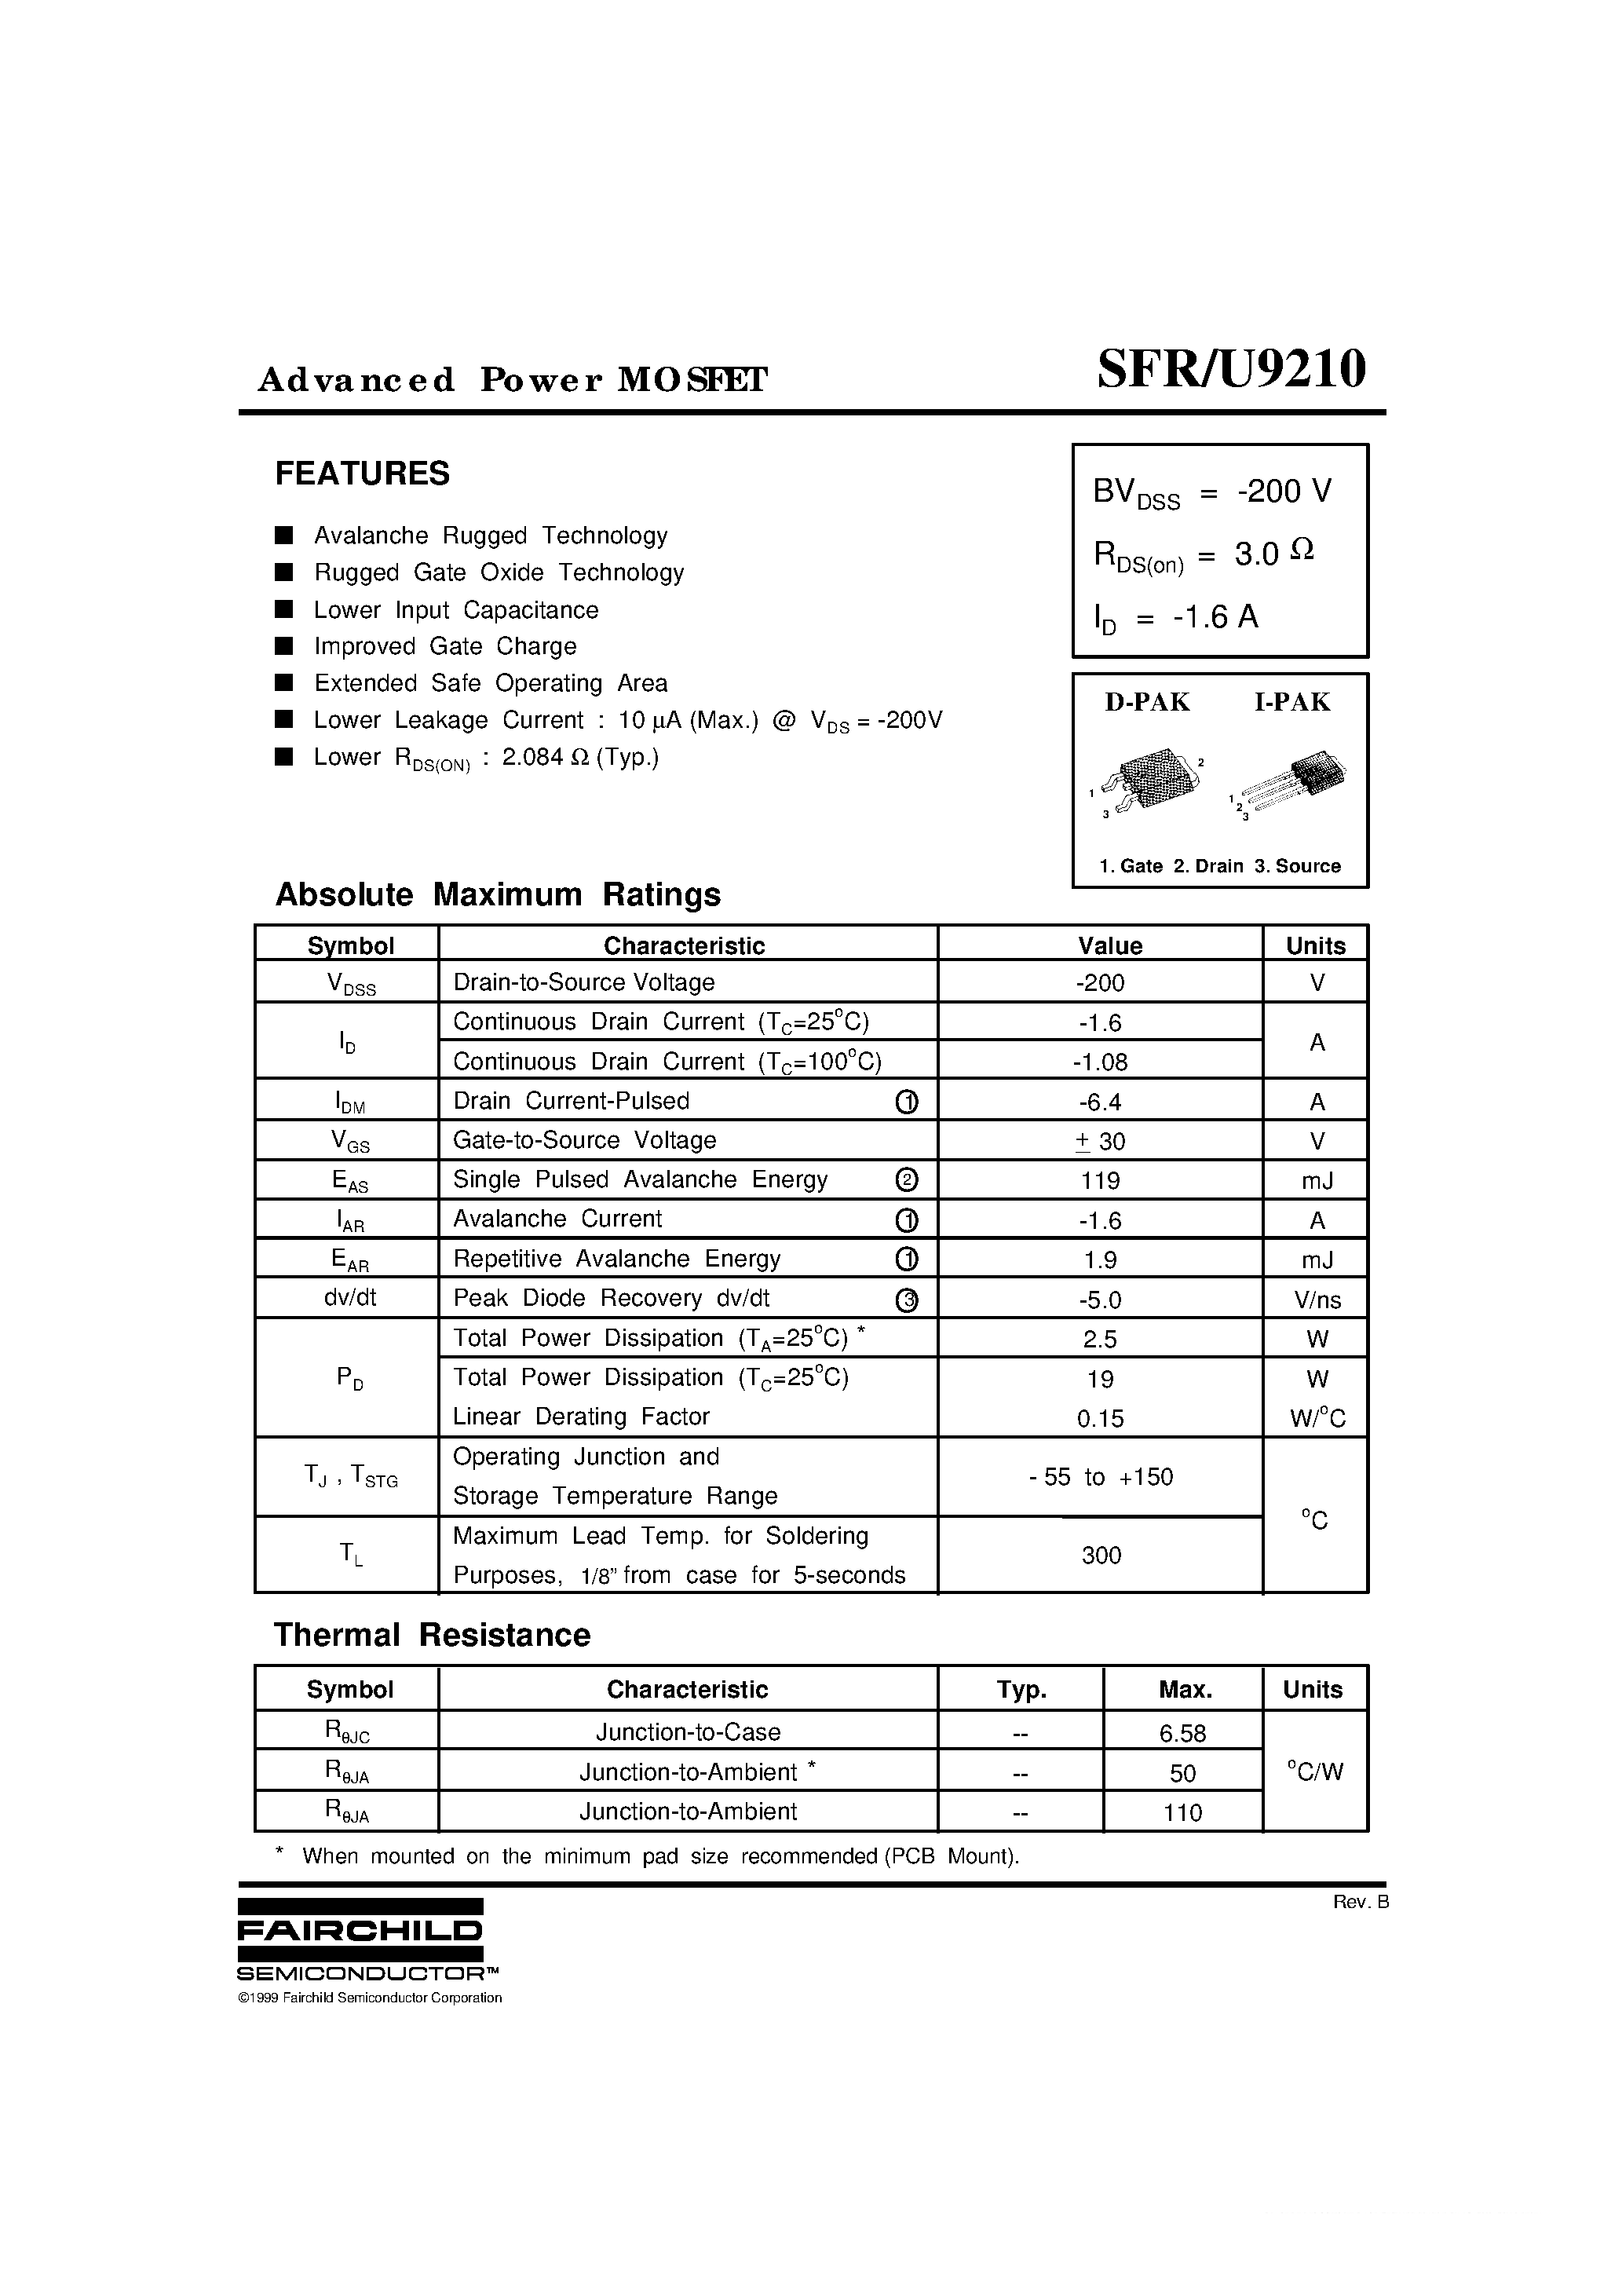 Даташит SFR9210 - Advanced Power MOSFET страница 1